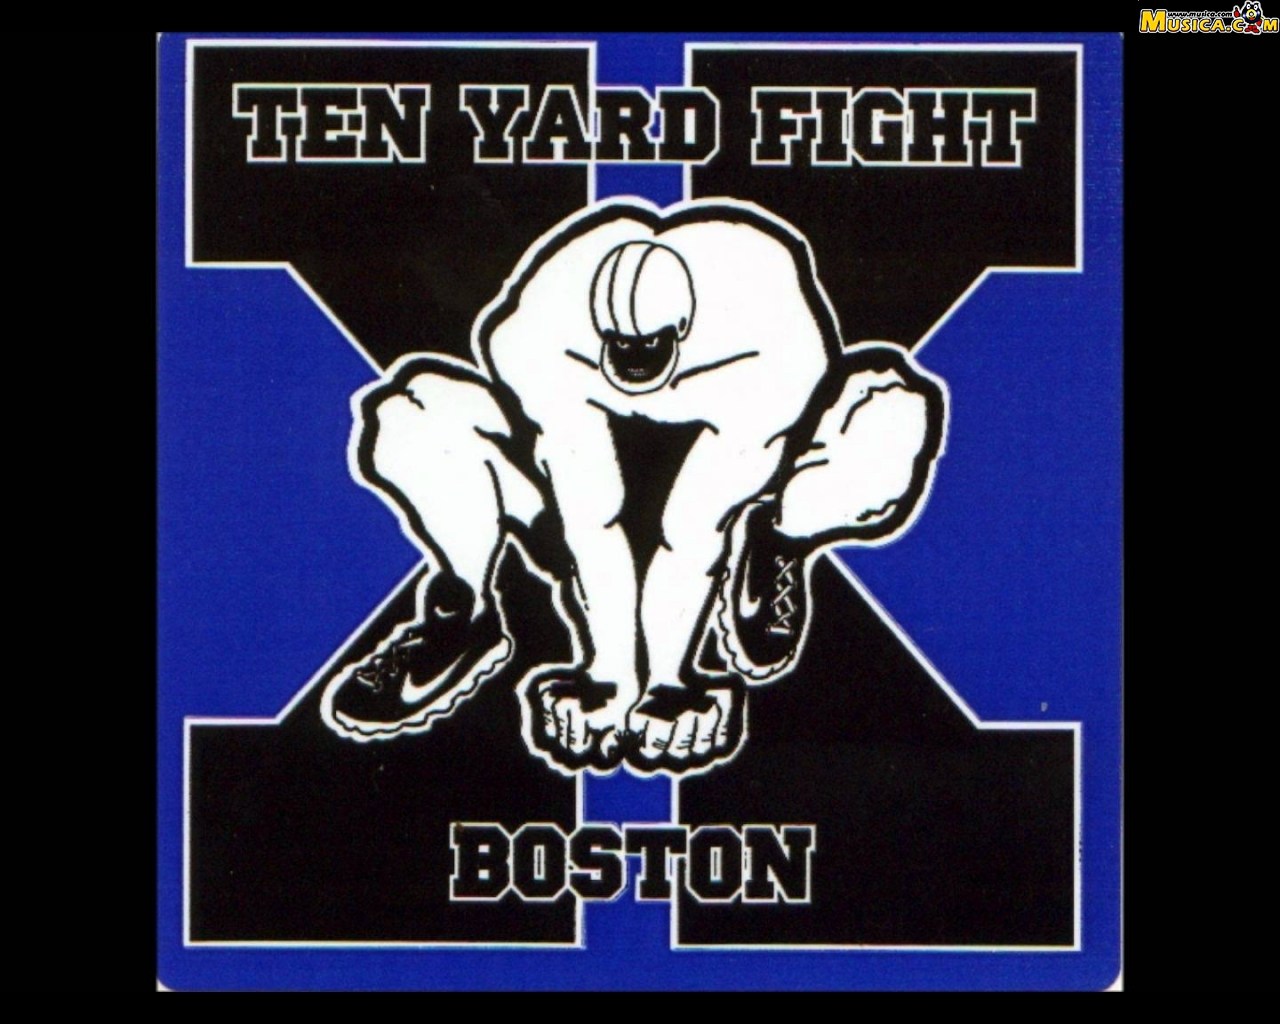 Fondo de pantalla de Ten Yard Fight